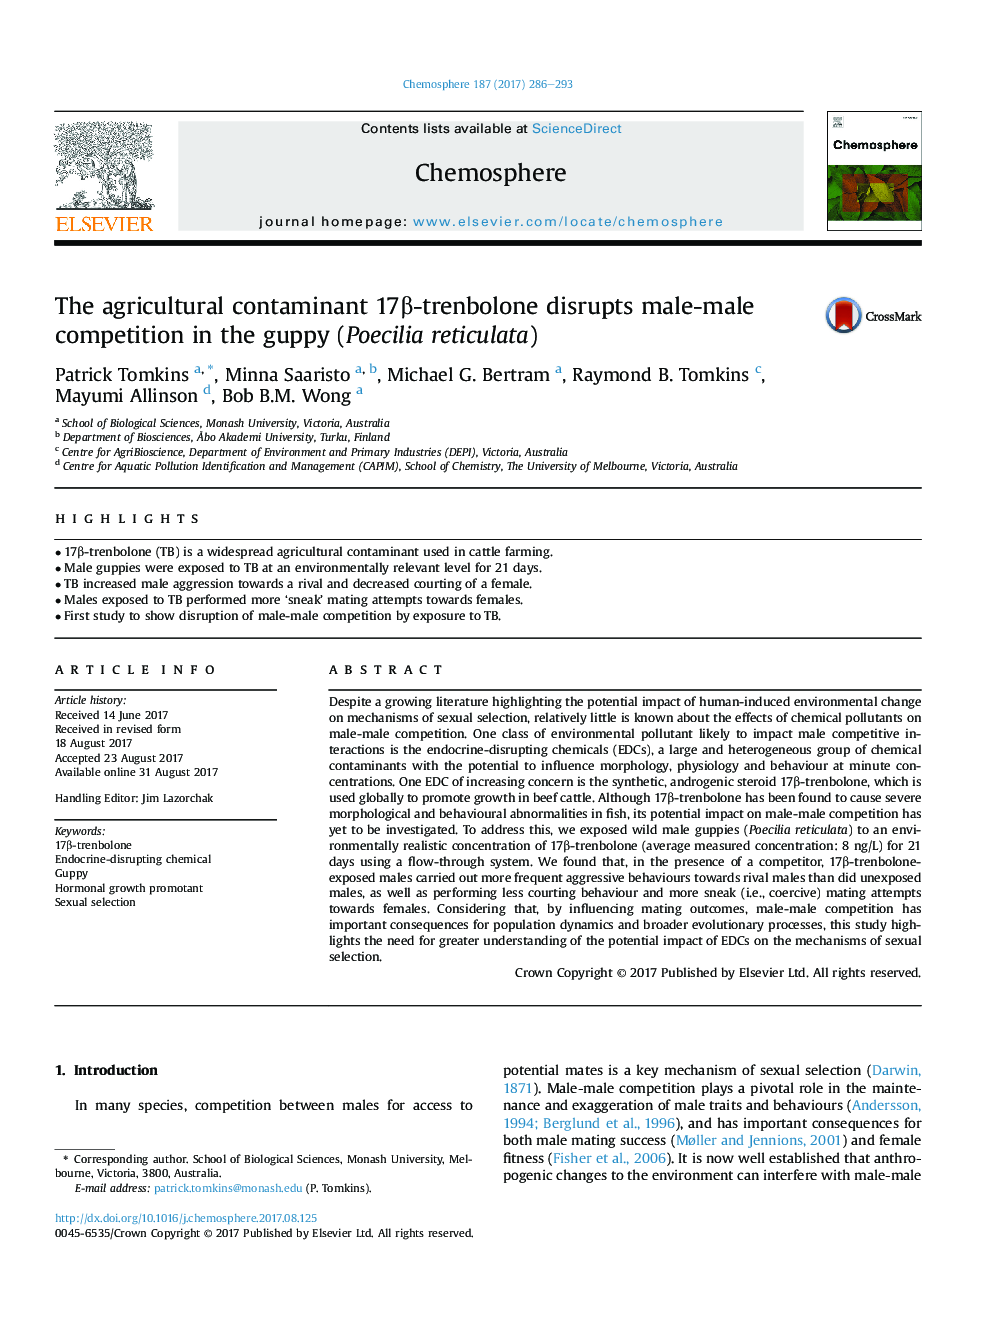 The agricultural contaminant 17Î²-trenbolone disrupts male-male competition in the guppy (Poecilia reticulata)